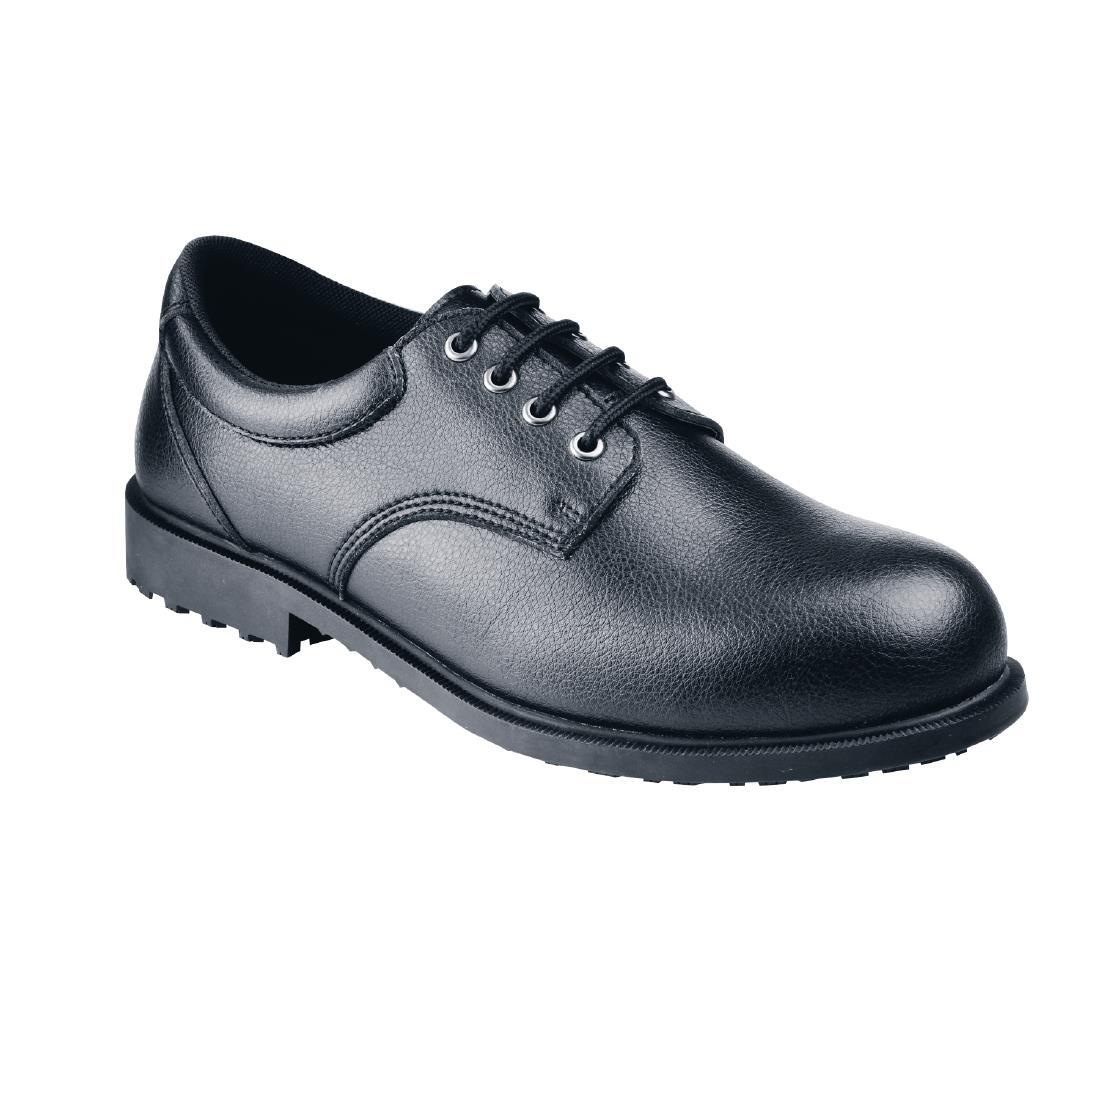 Shoes for Crews Cambridge Steel Toe Dress Shoe Size 41 - BB611-41  - 1